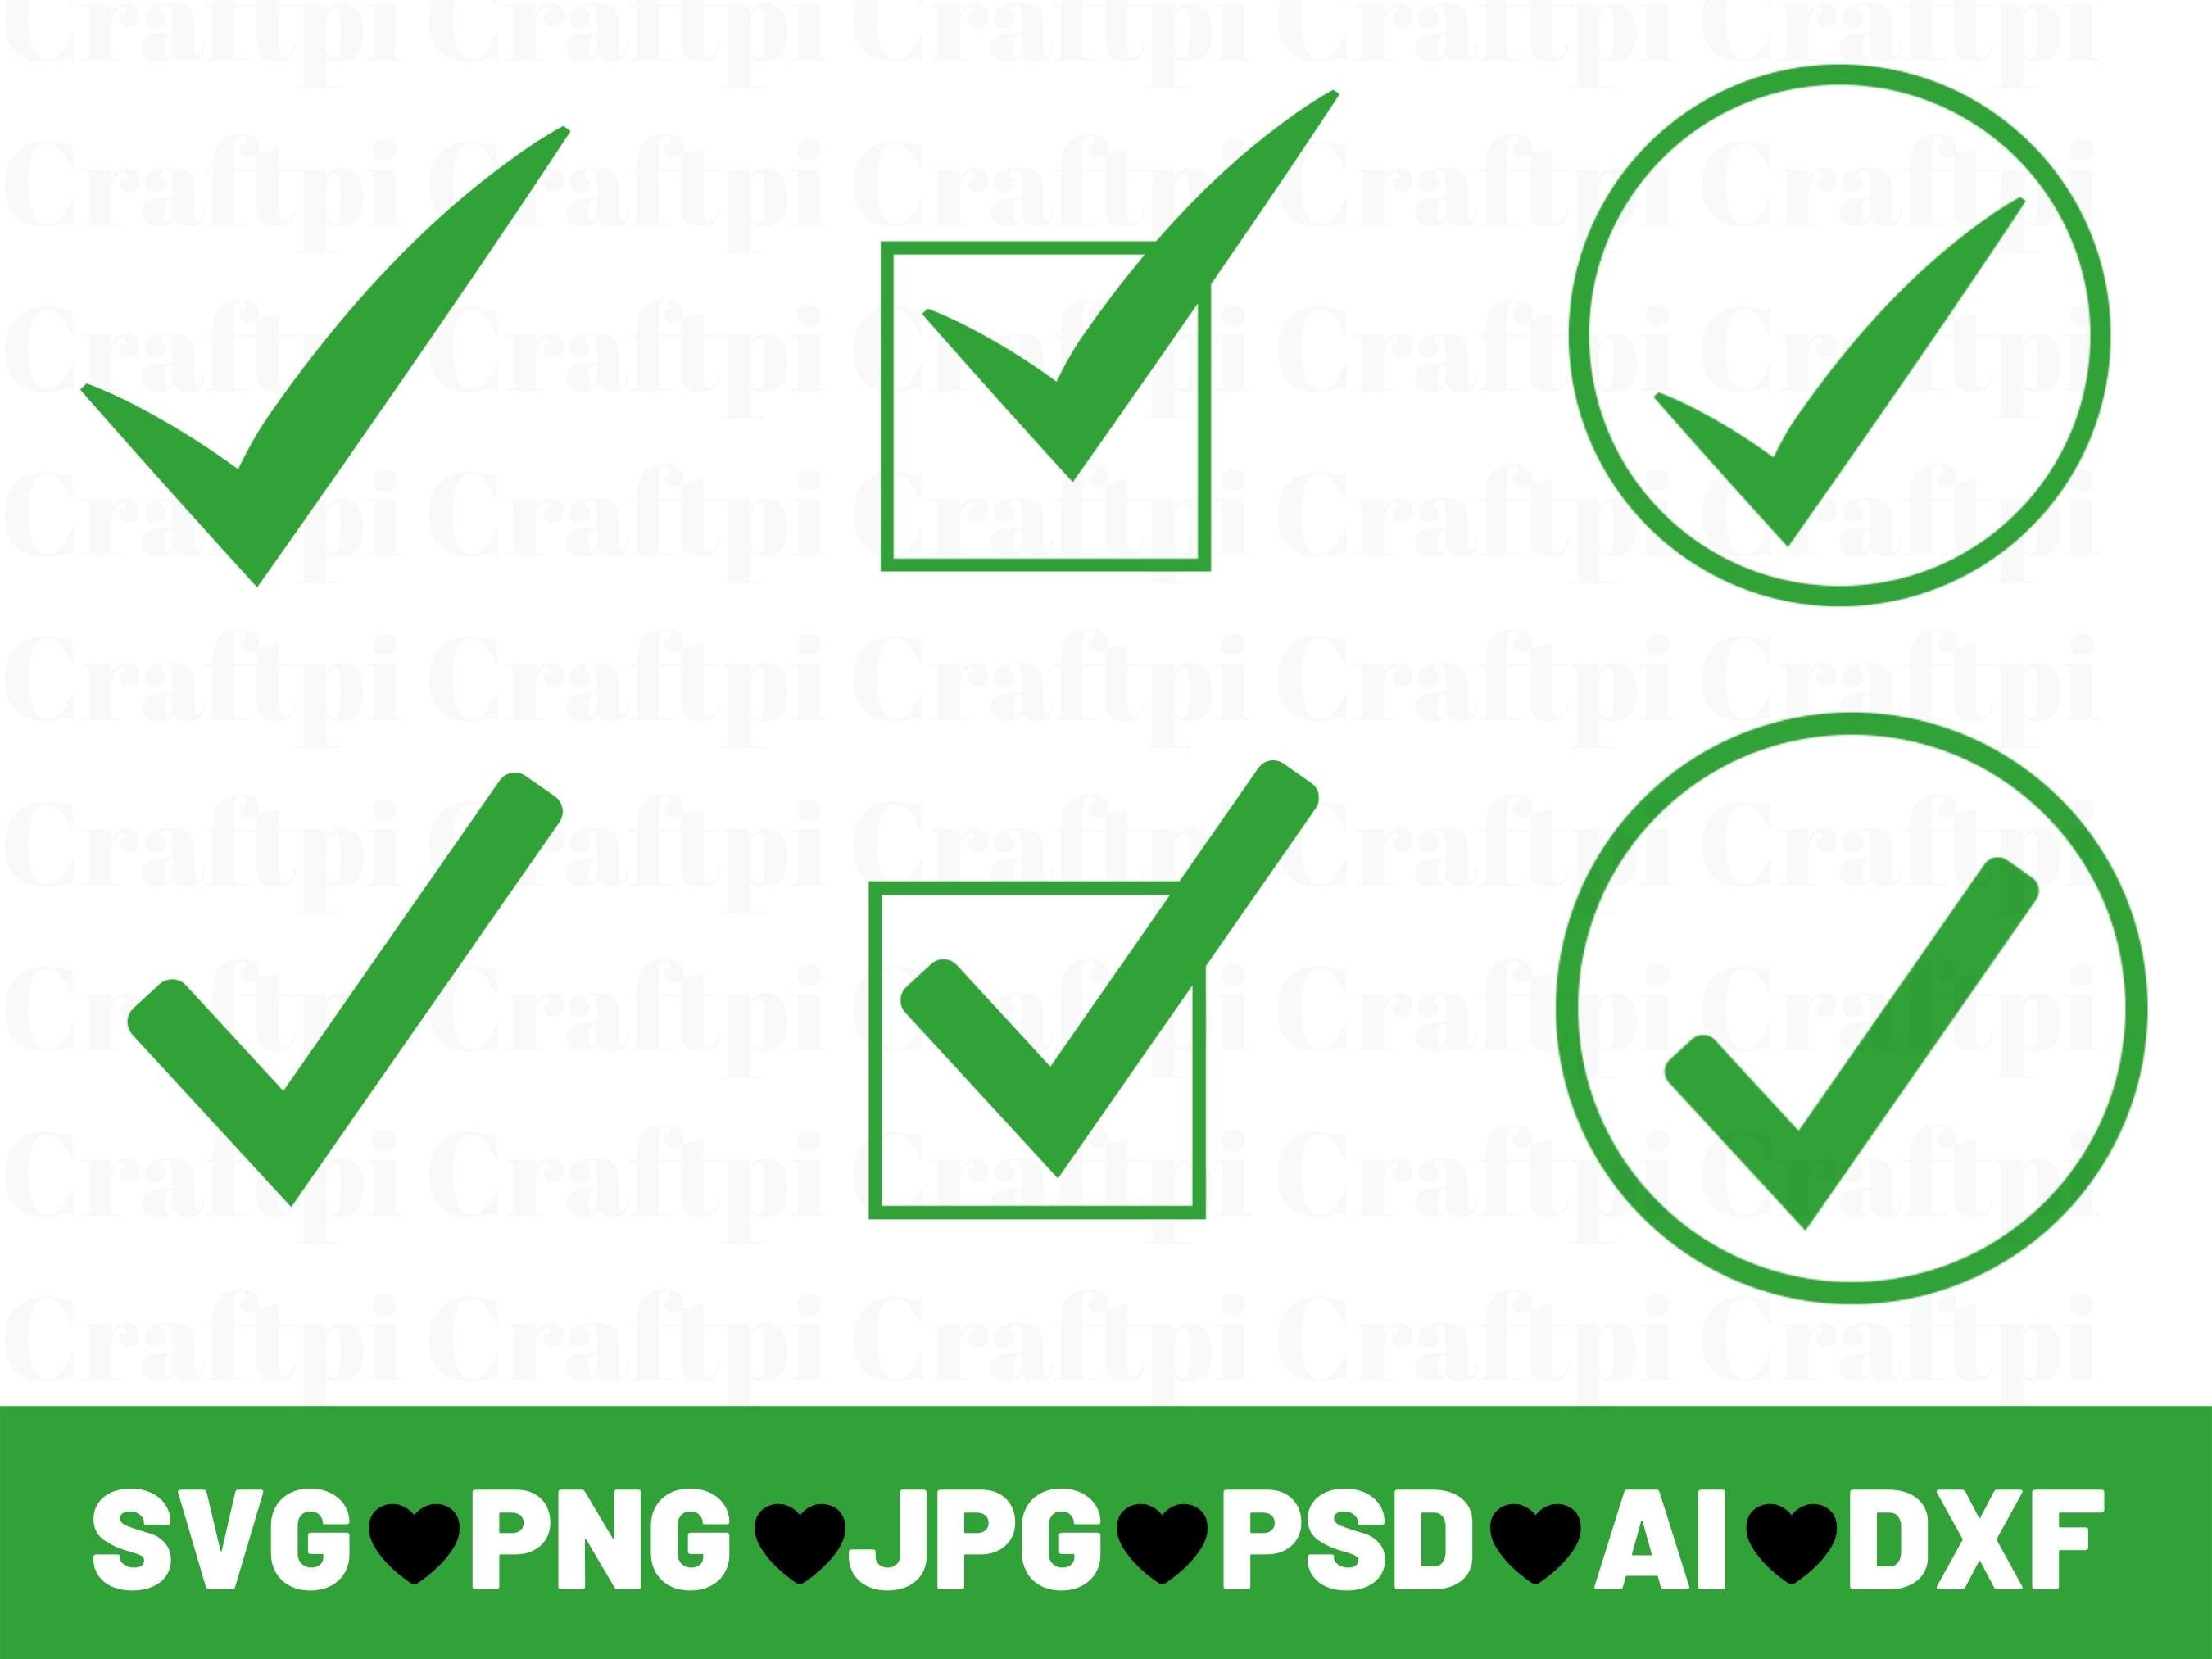 Check Mark Symbol Cross PNG Images & PSDs for Download